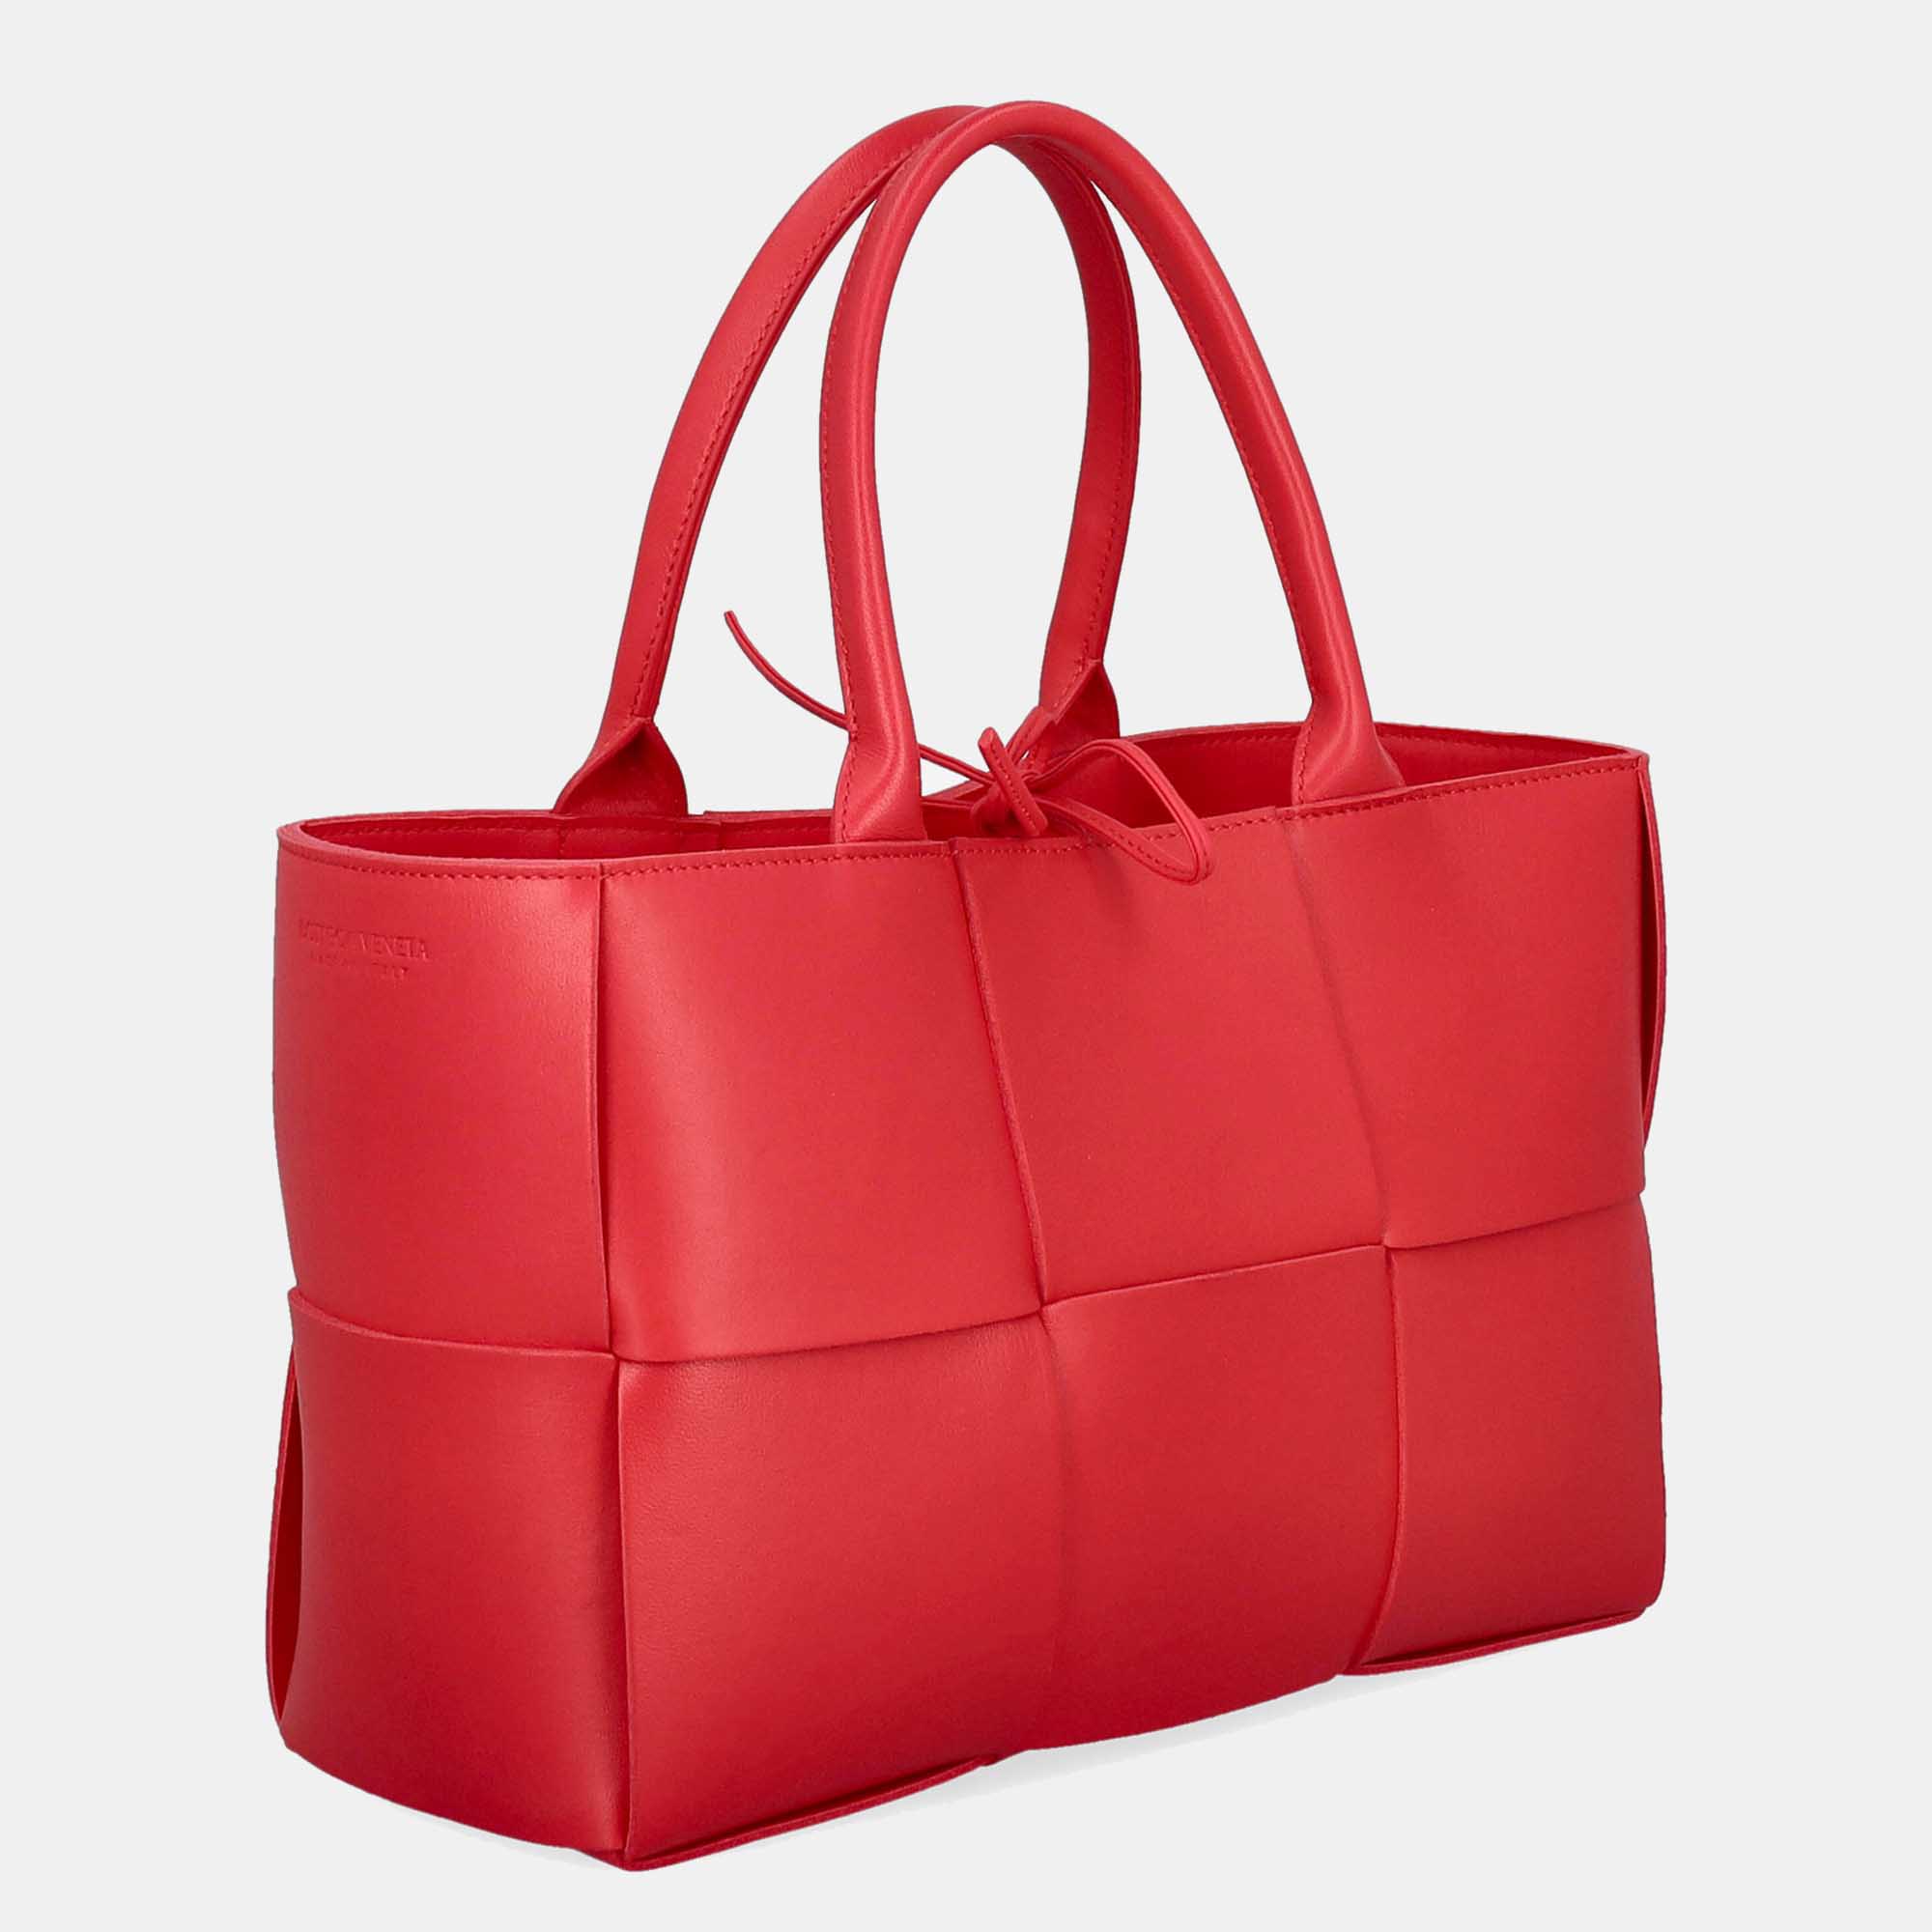 Bottega Veneta  Women's Leather Tote Bag - Pink - One Size